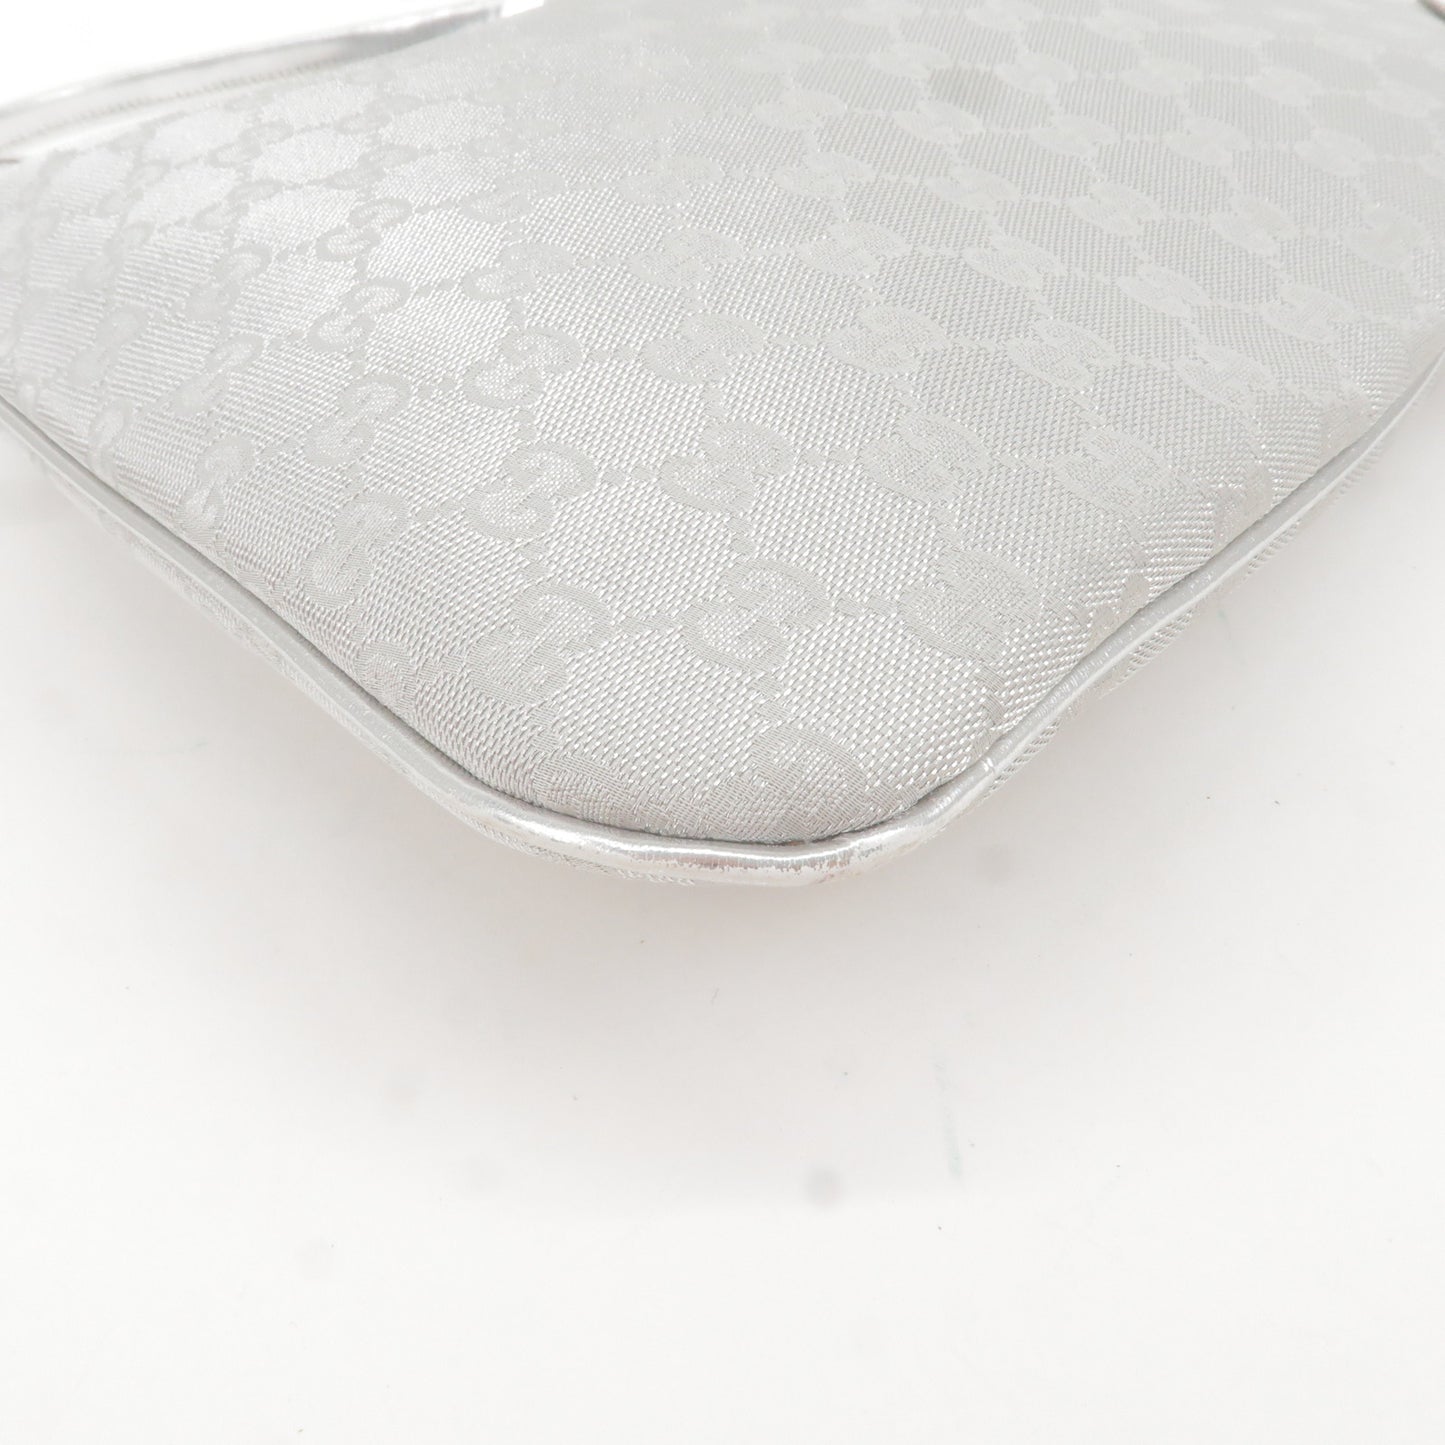 Gucci Interlocking GG Canvas Leather Shoulder Bag Silver 169947